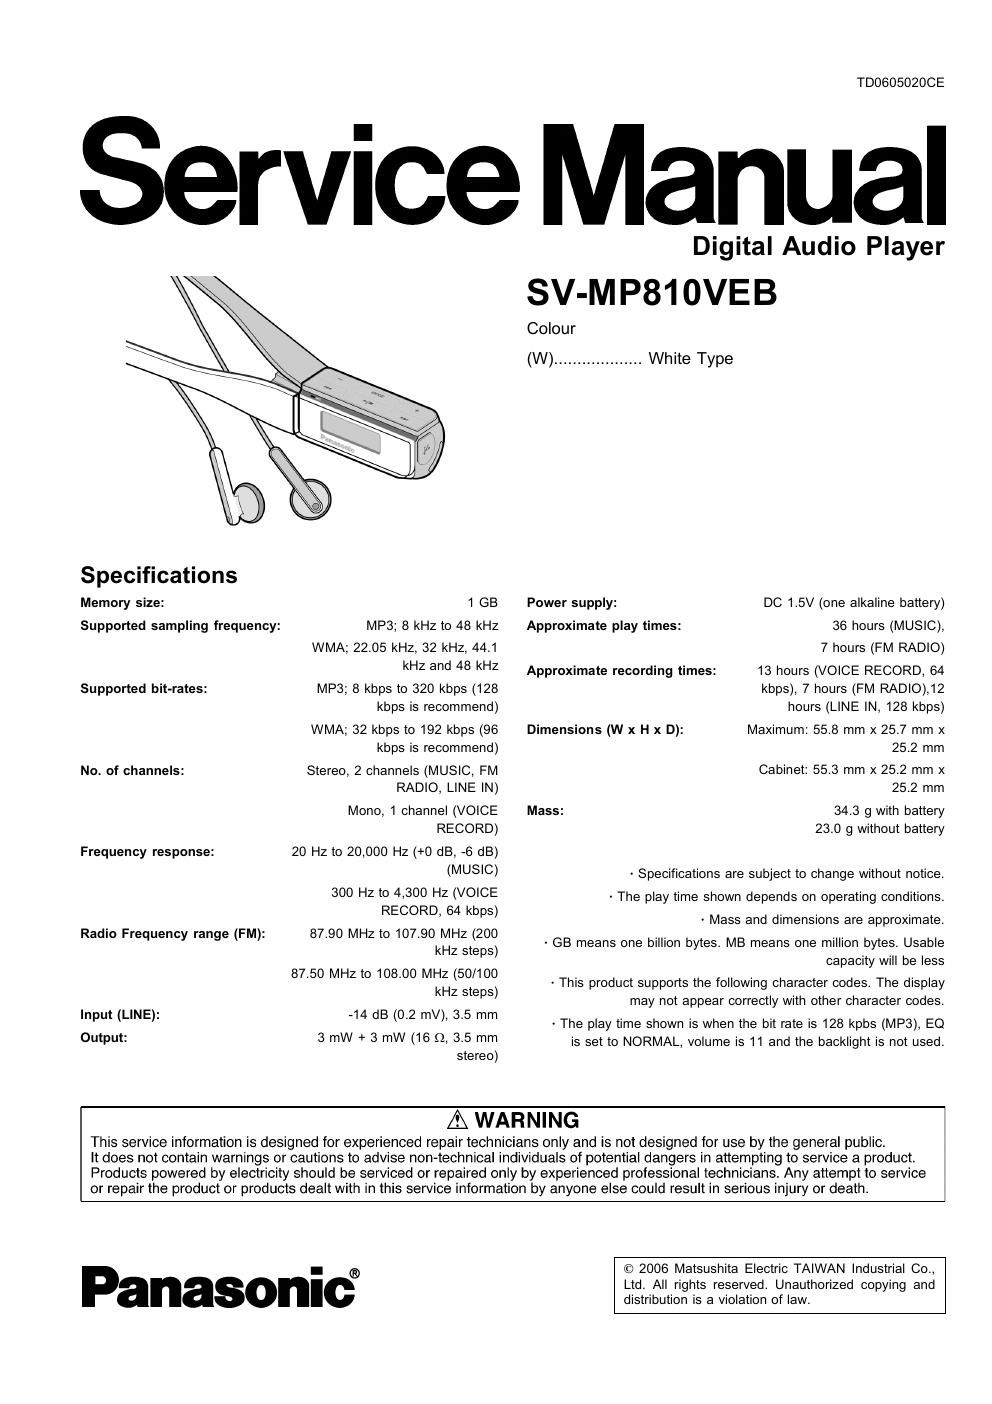 panasonic sv mp 810 veb service manual